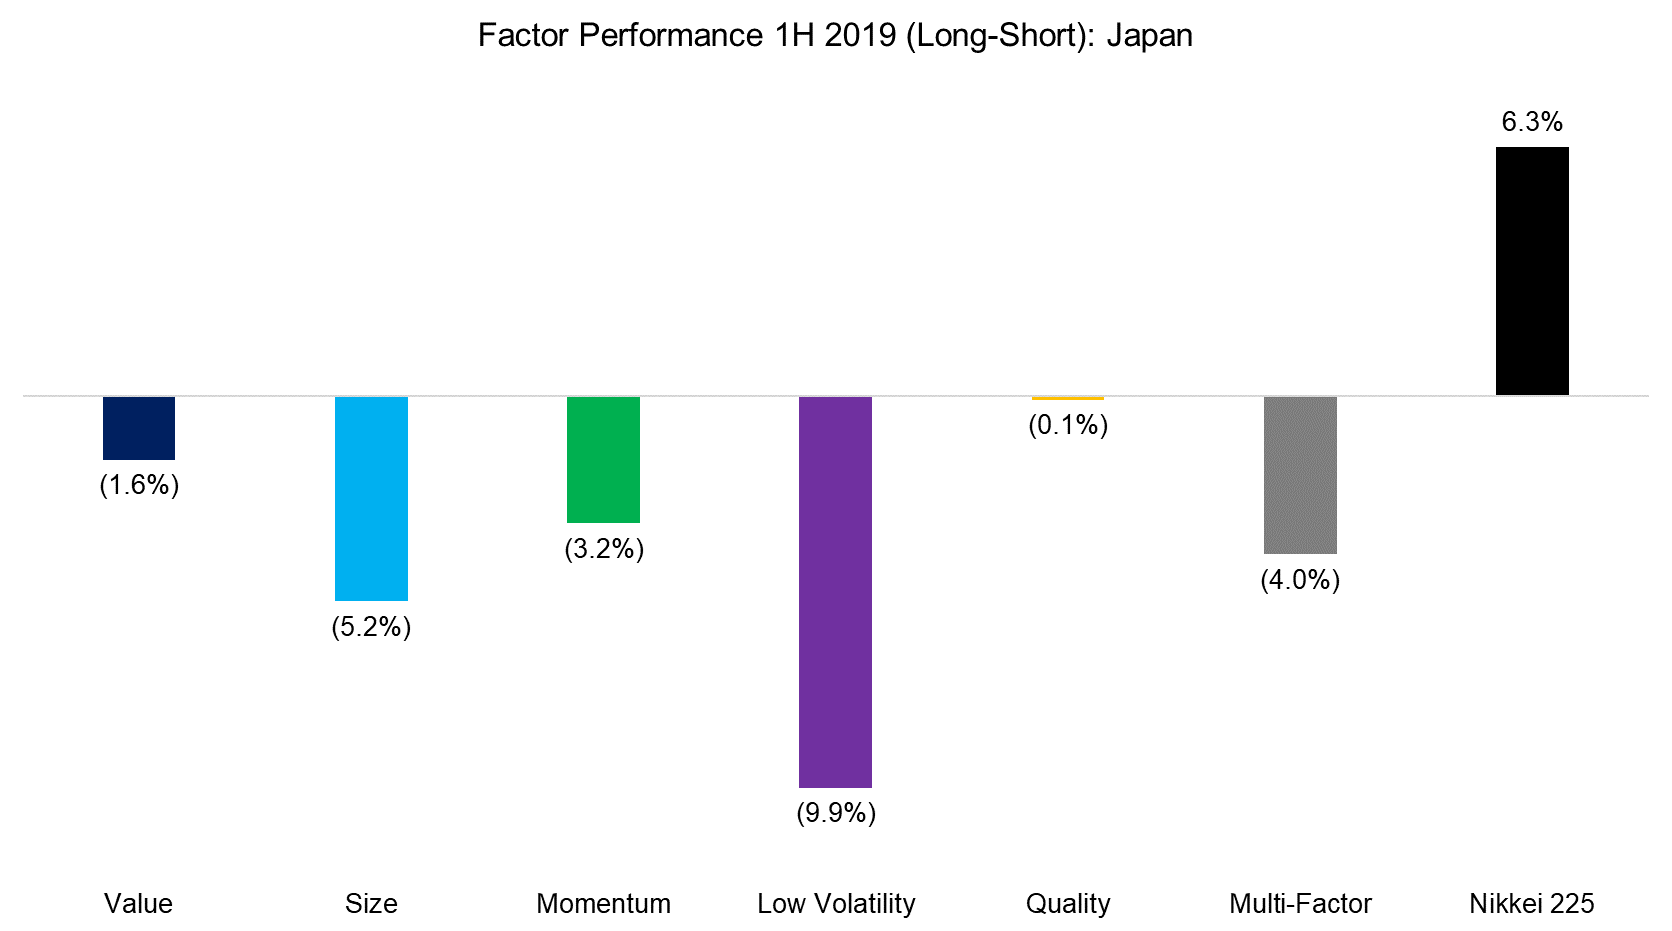 Factor Performance 1H 2019 (Long-Short) Japan